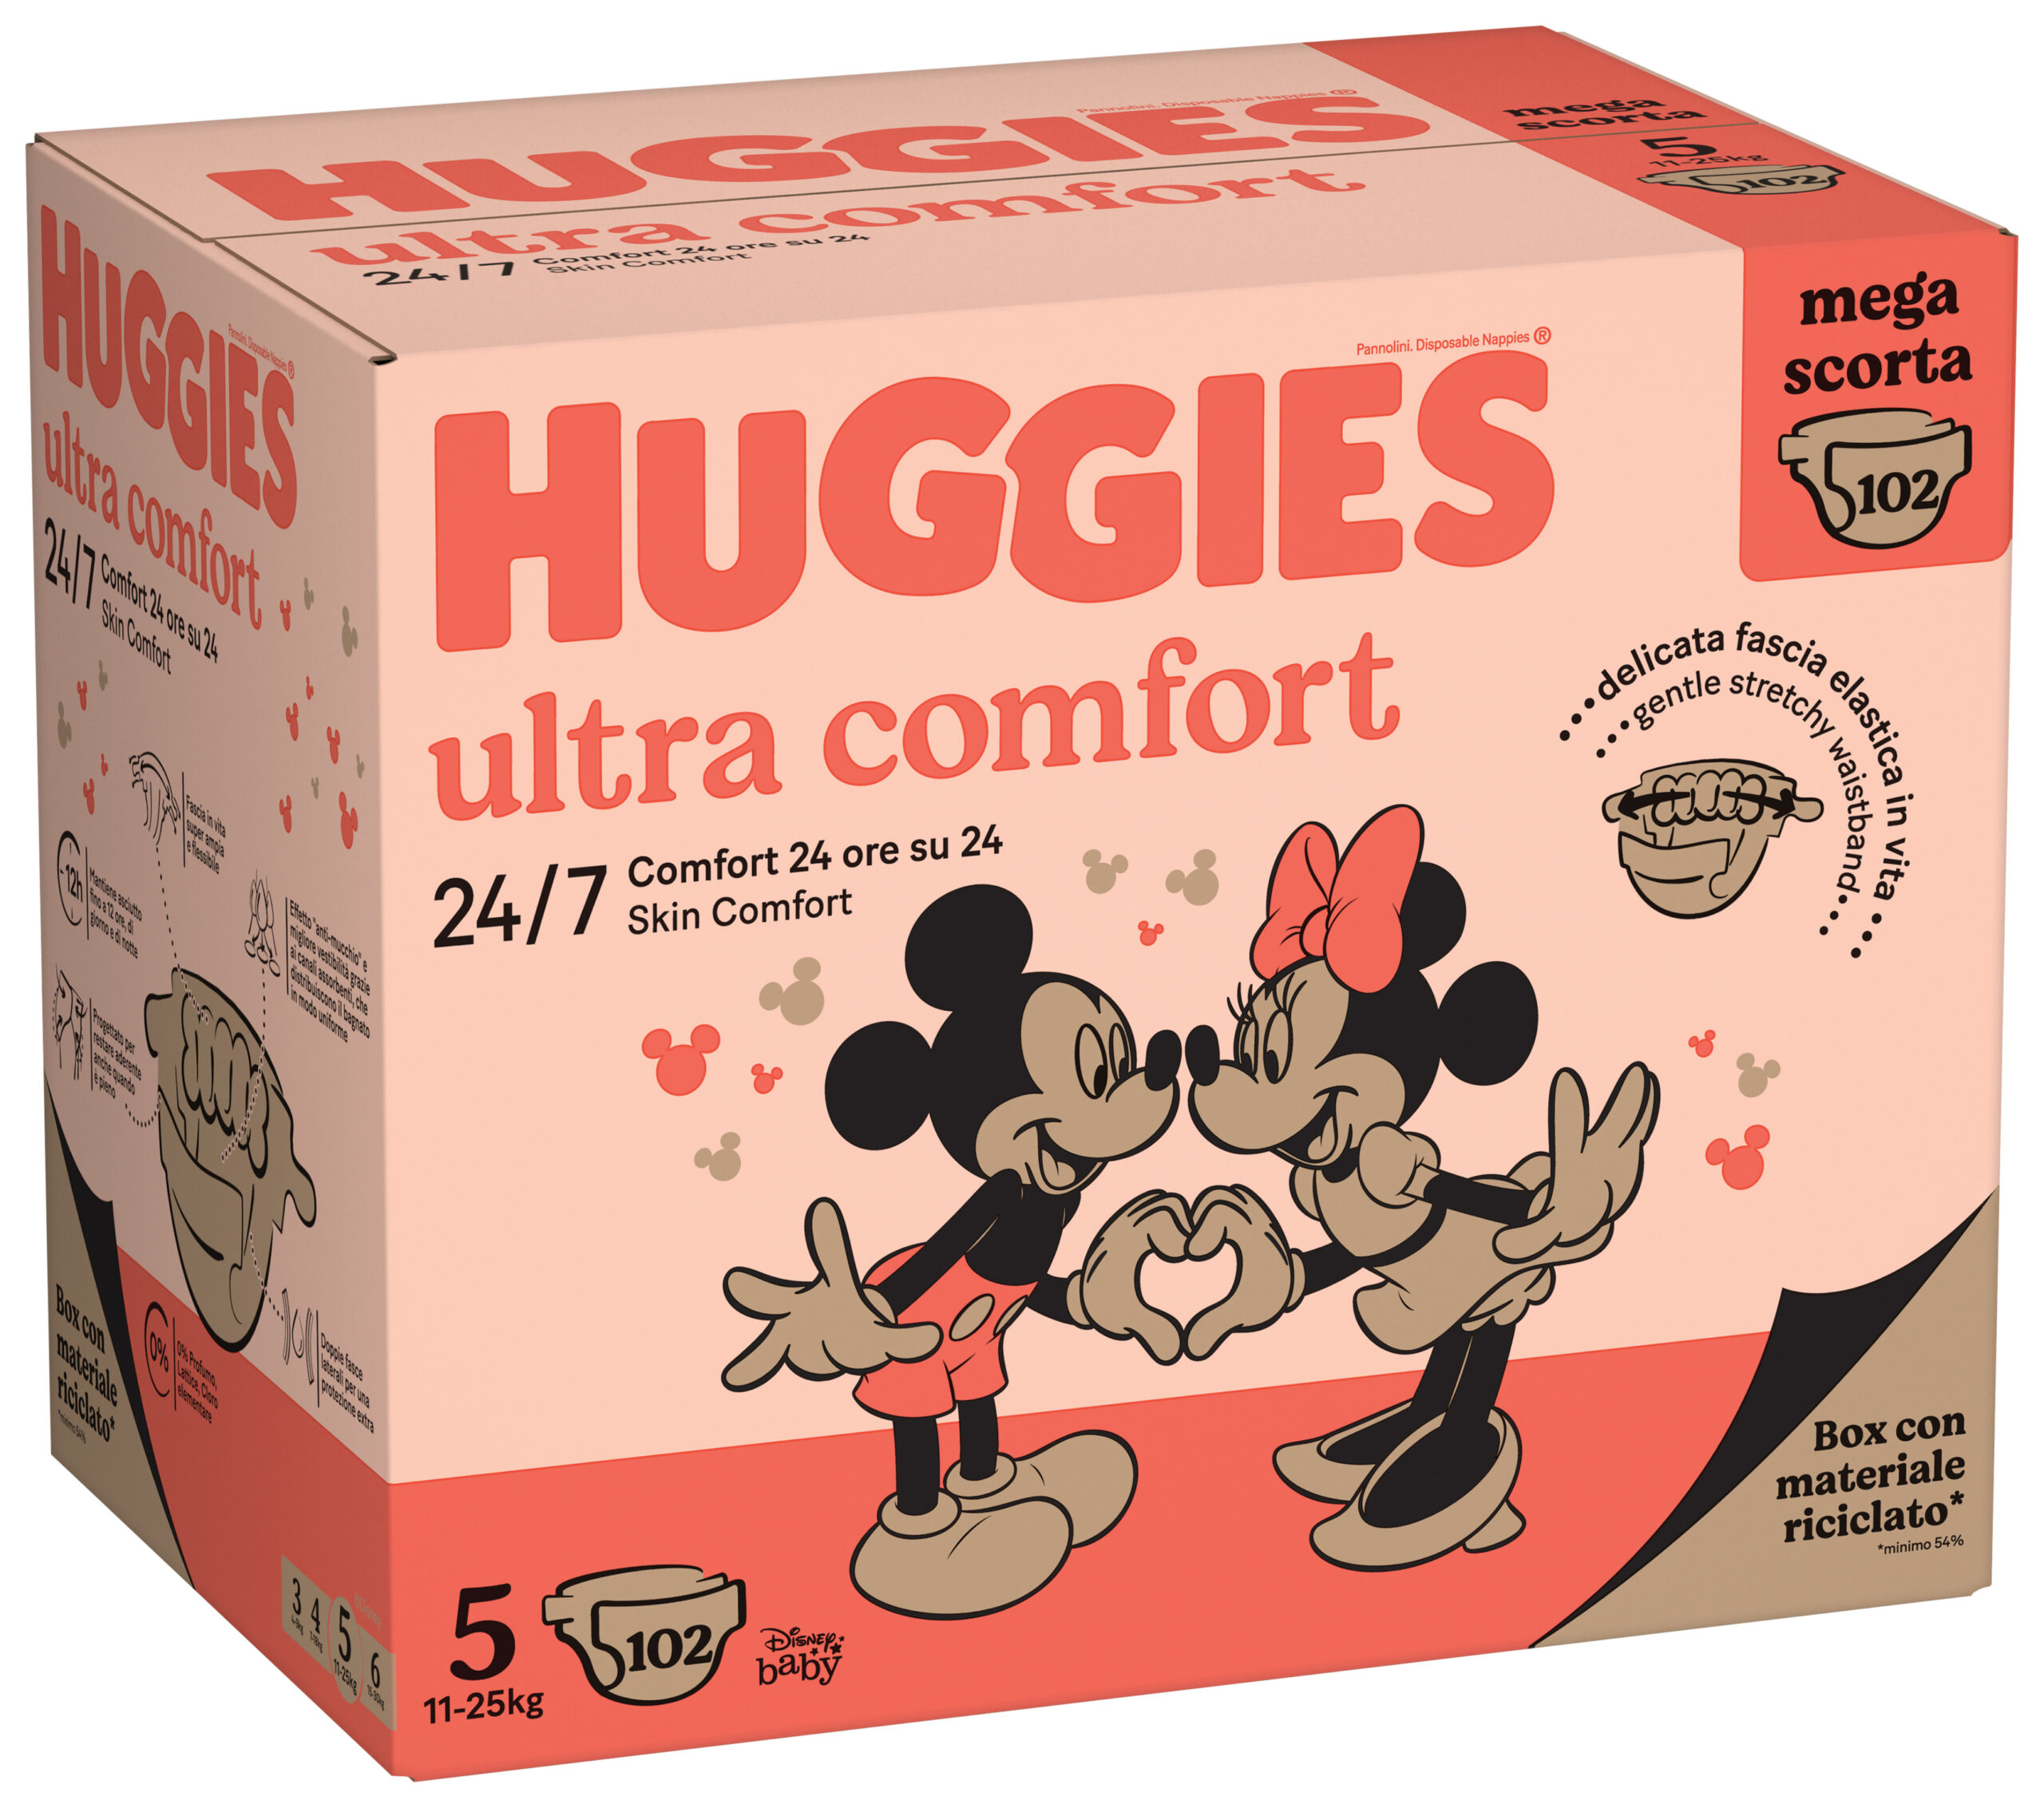 Huggies ultra comfort megapack tg.5 - 102 pezzi - Huggies